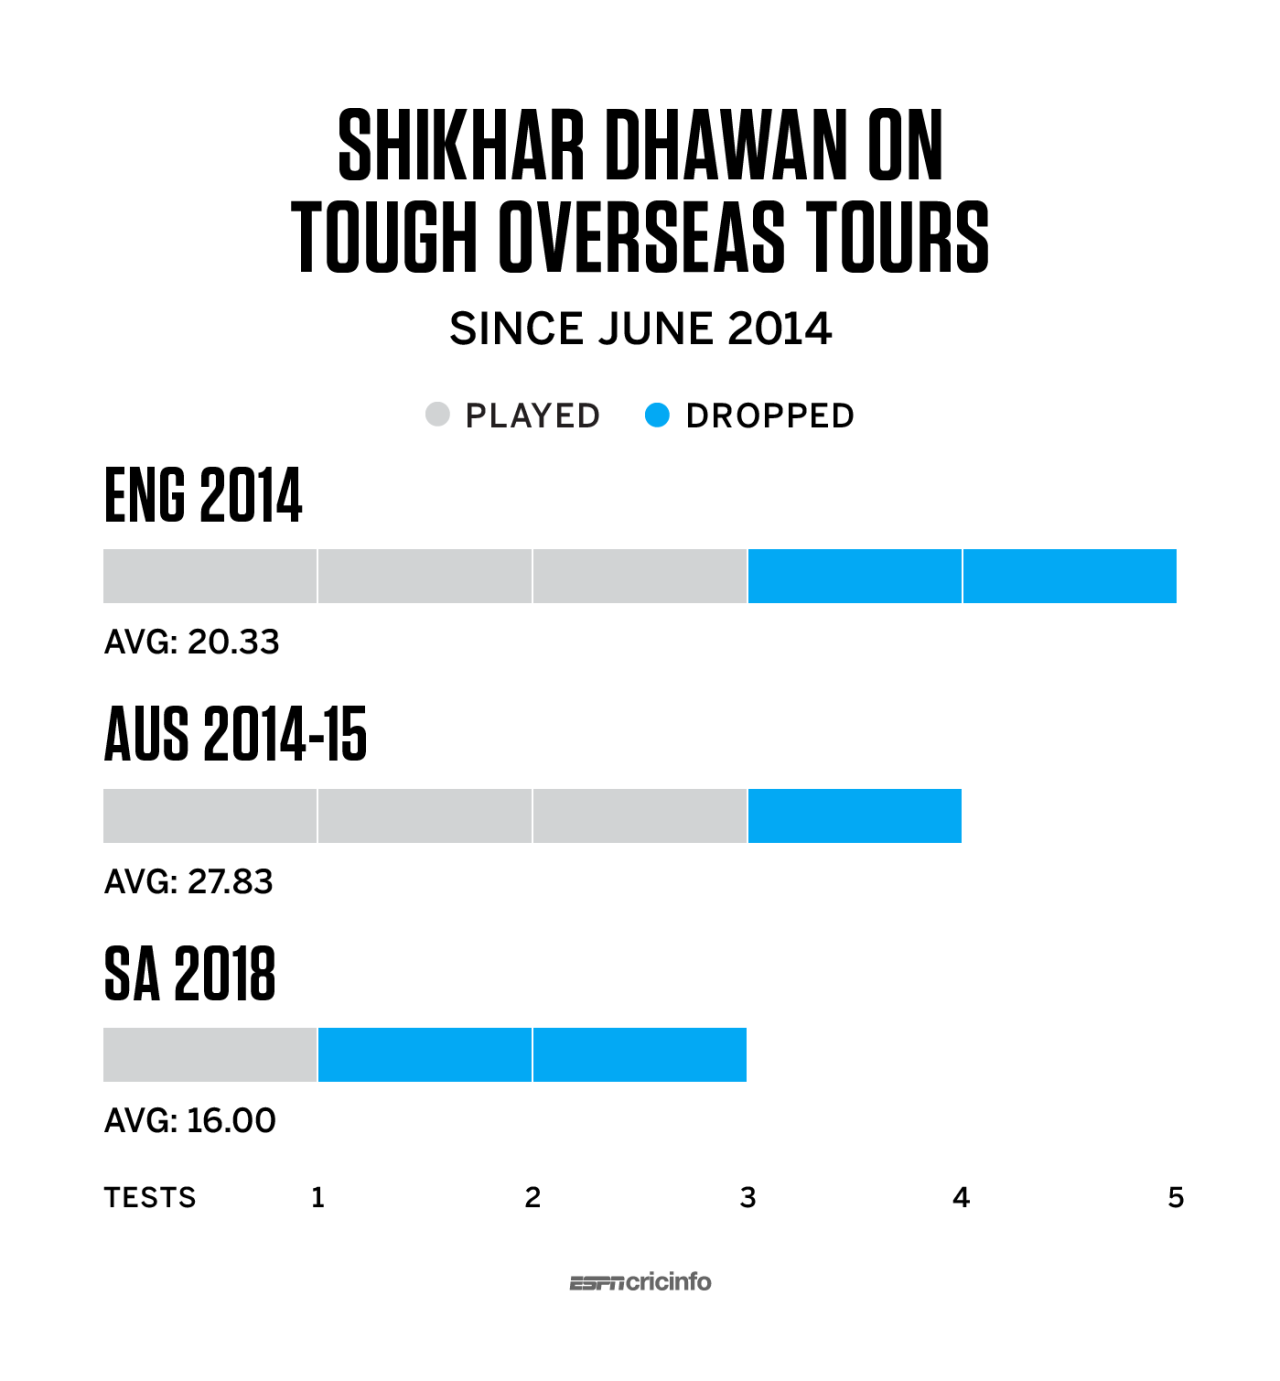 Shikhar Dhawan on tough overseas tours, August 11, 2018